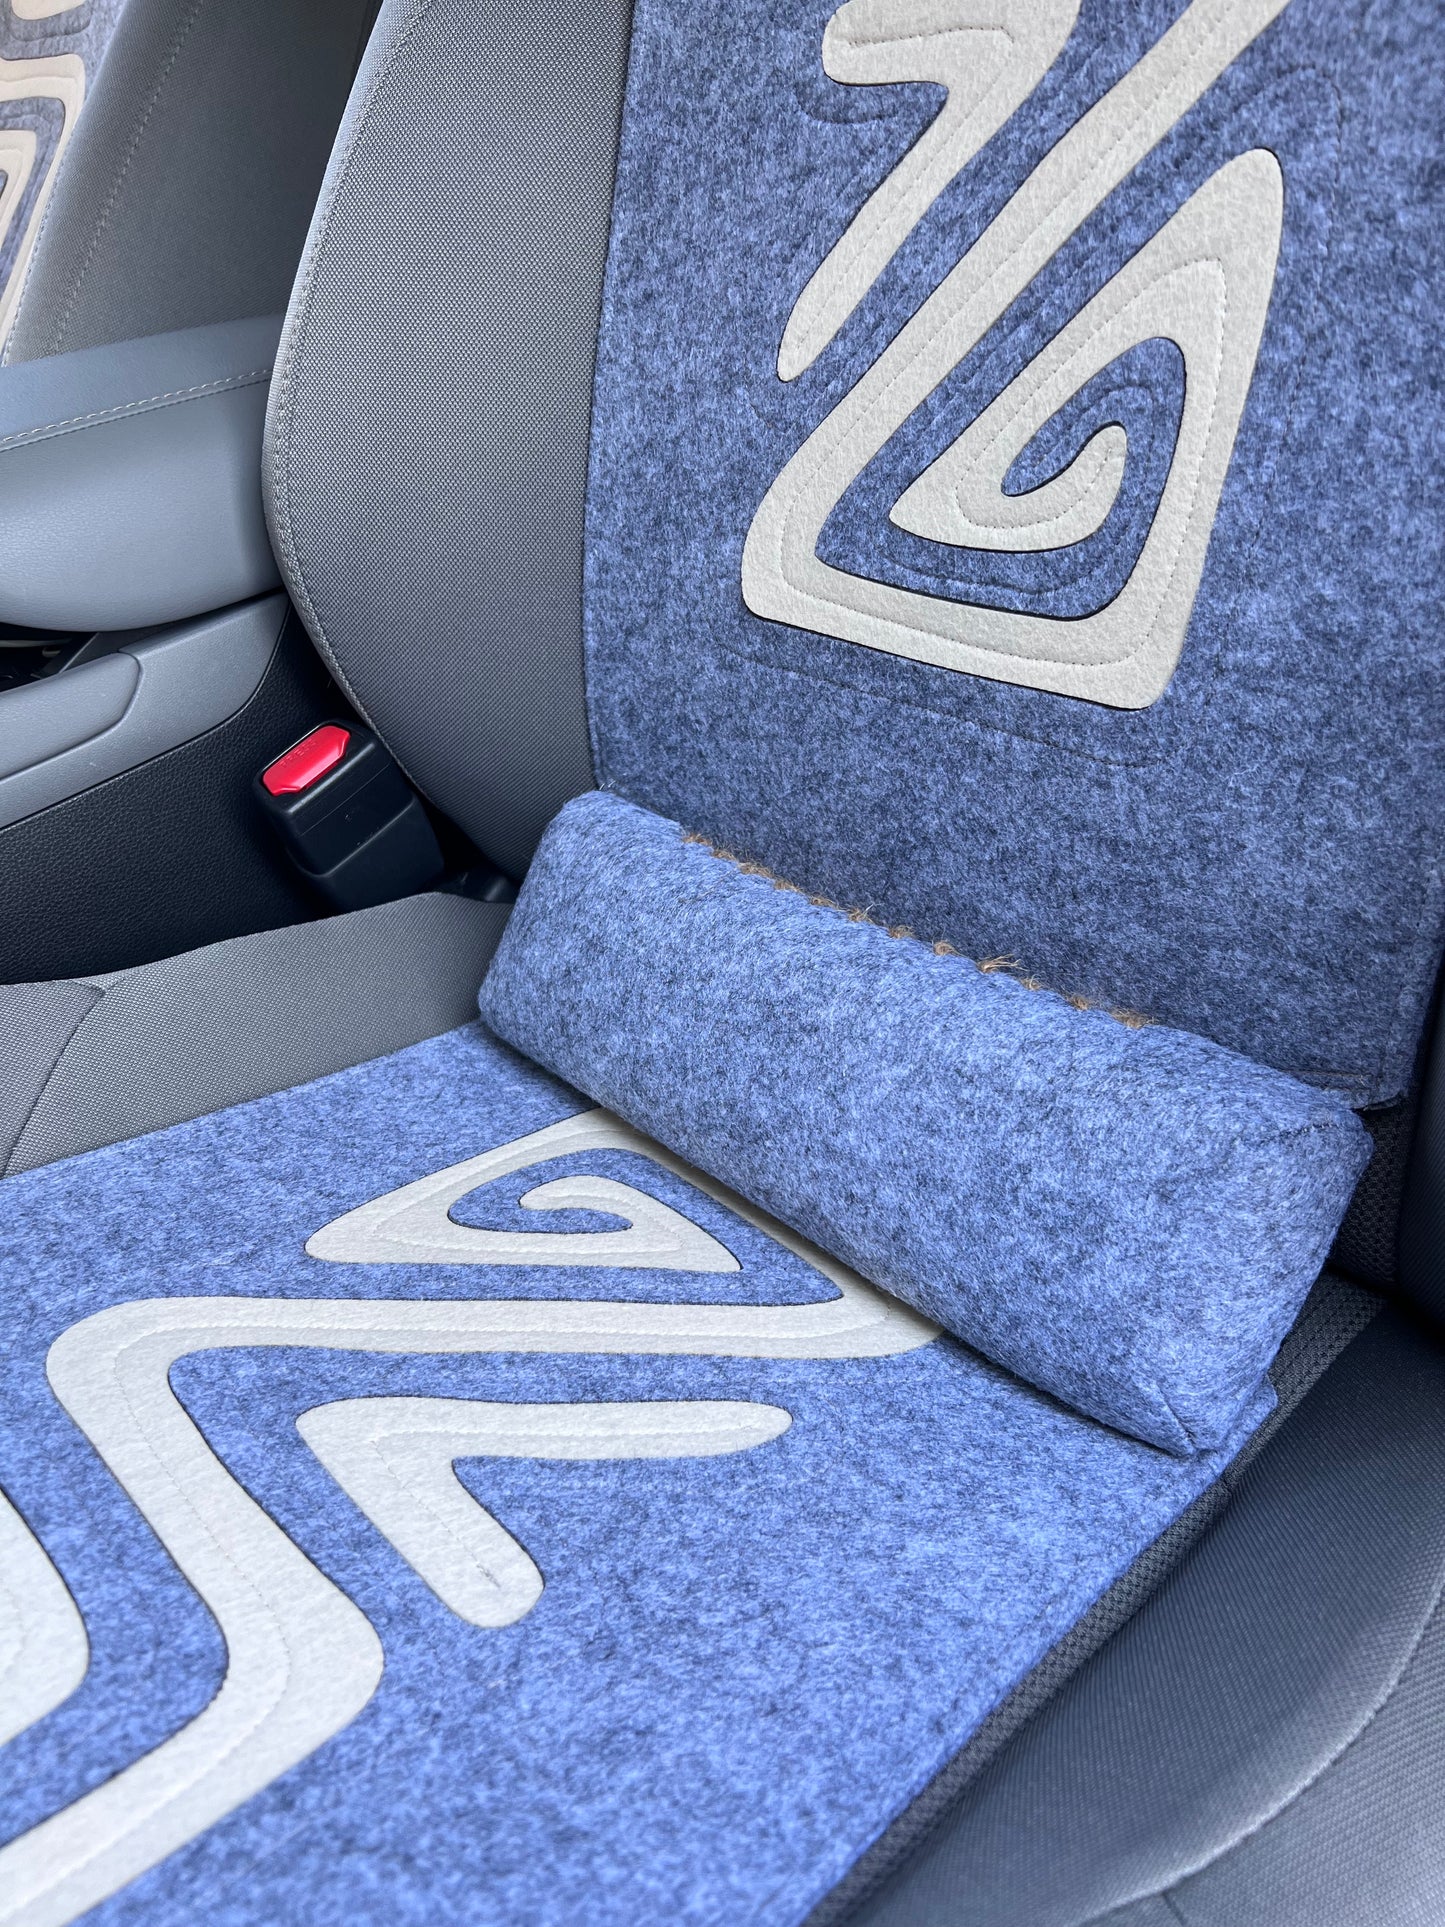 KOCHKOR Luxury Car Seat Covers